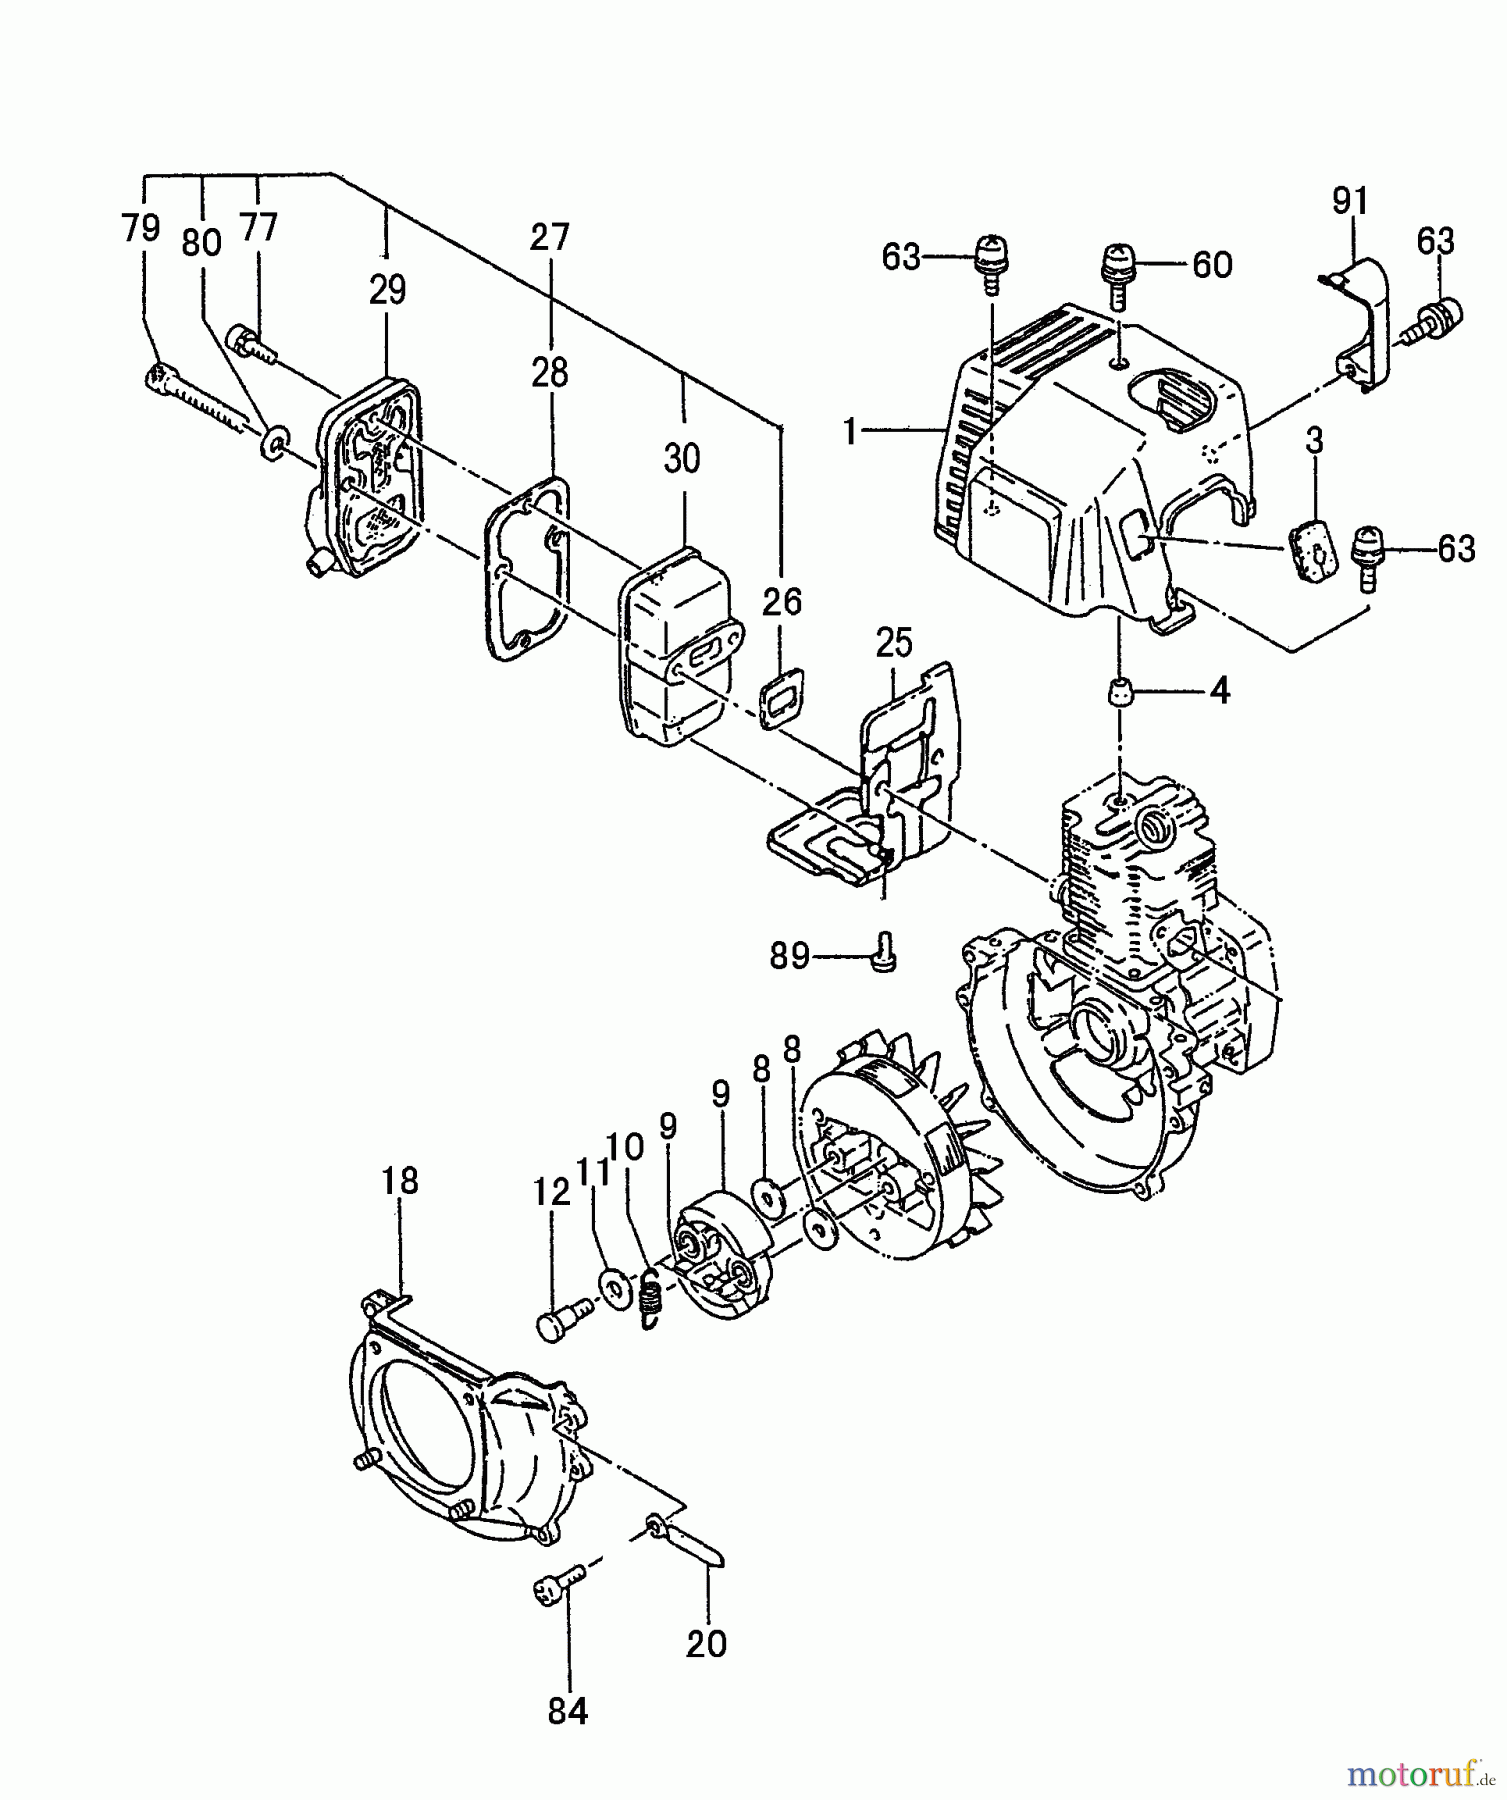  Tanaka Erdbohrer TED-262R - Tanaka Engine Drill W/Reverse Muffler, Fan Case, Clutch